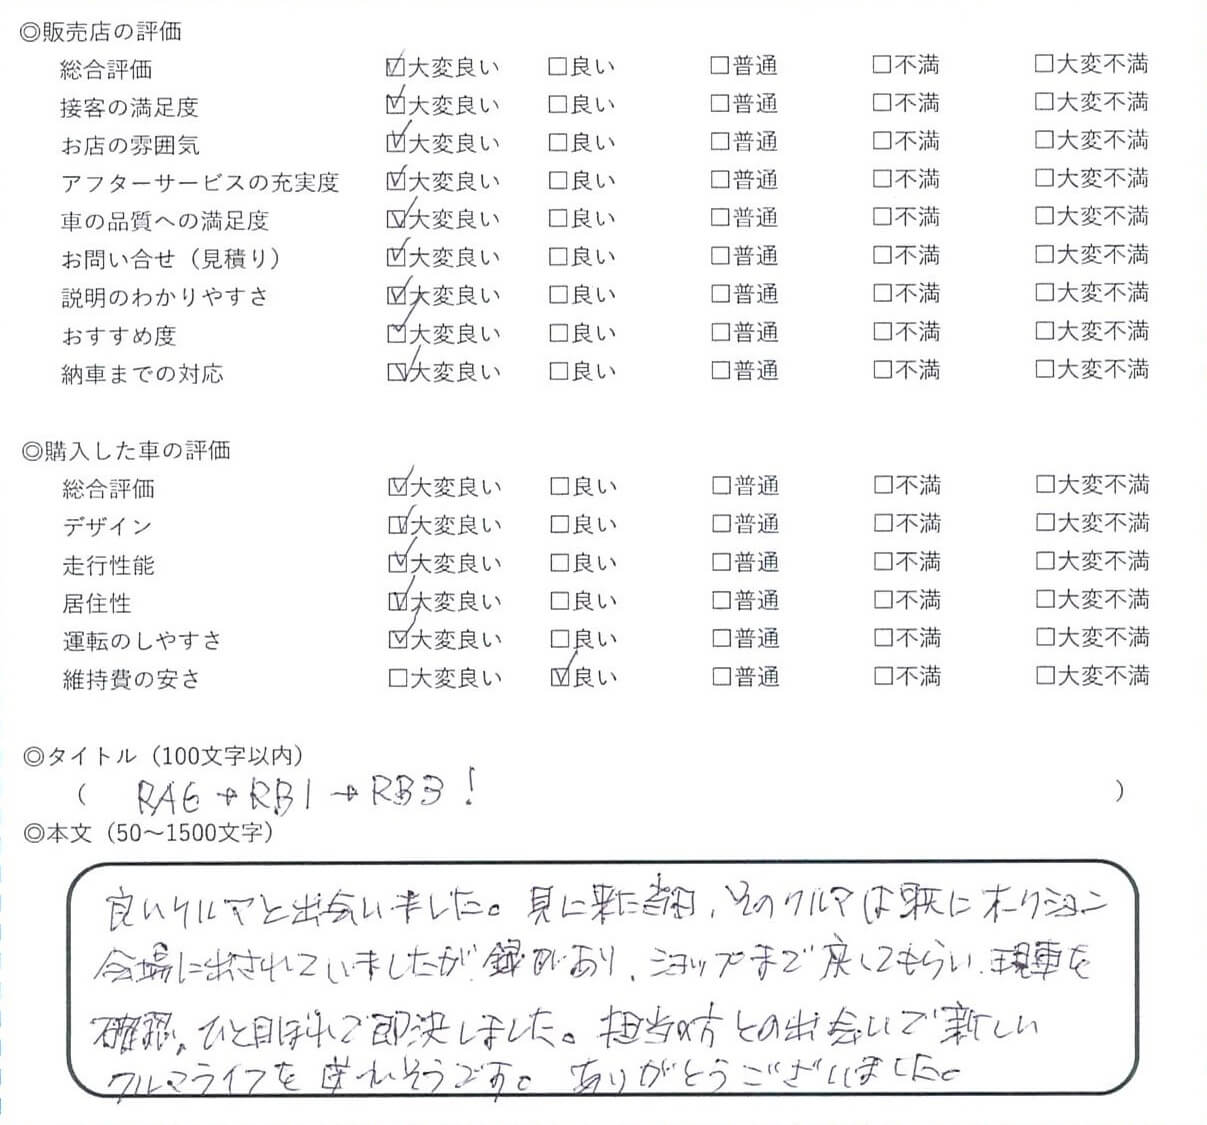 2017/09/12 - ｍｕｒａｔａ－ｔｖ - ホンダ・オデッセイ